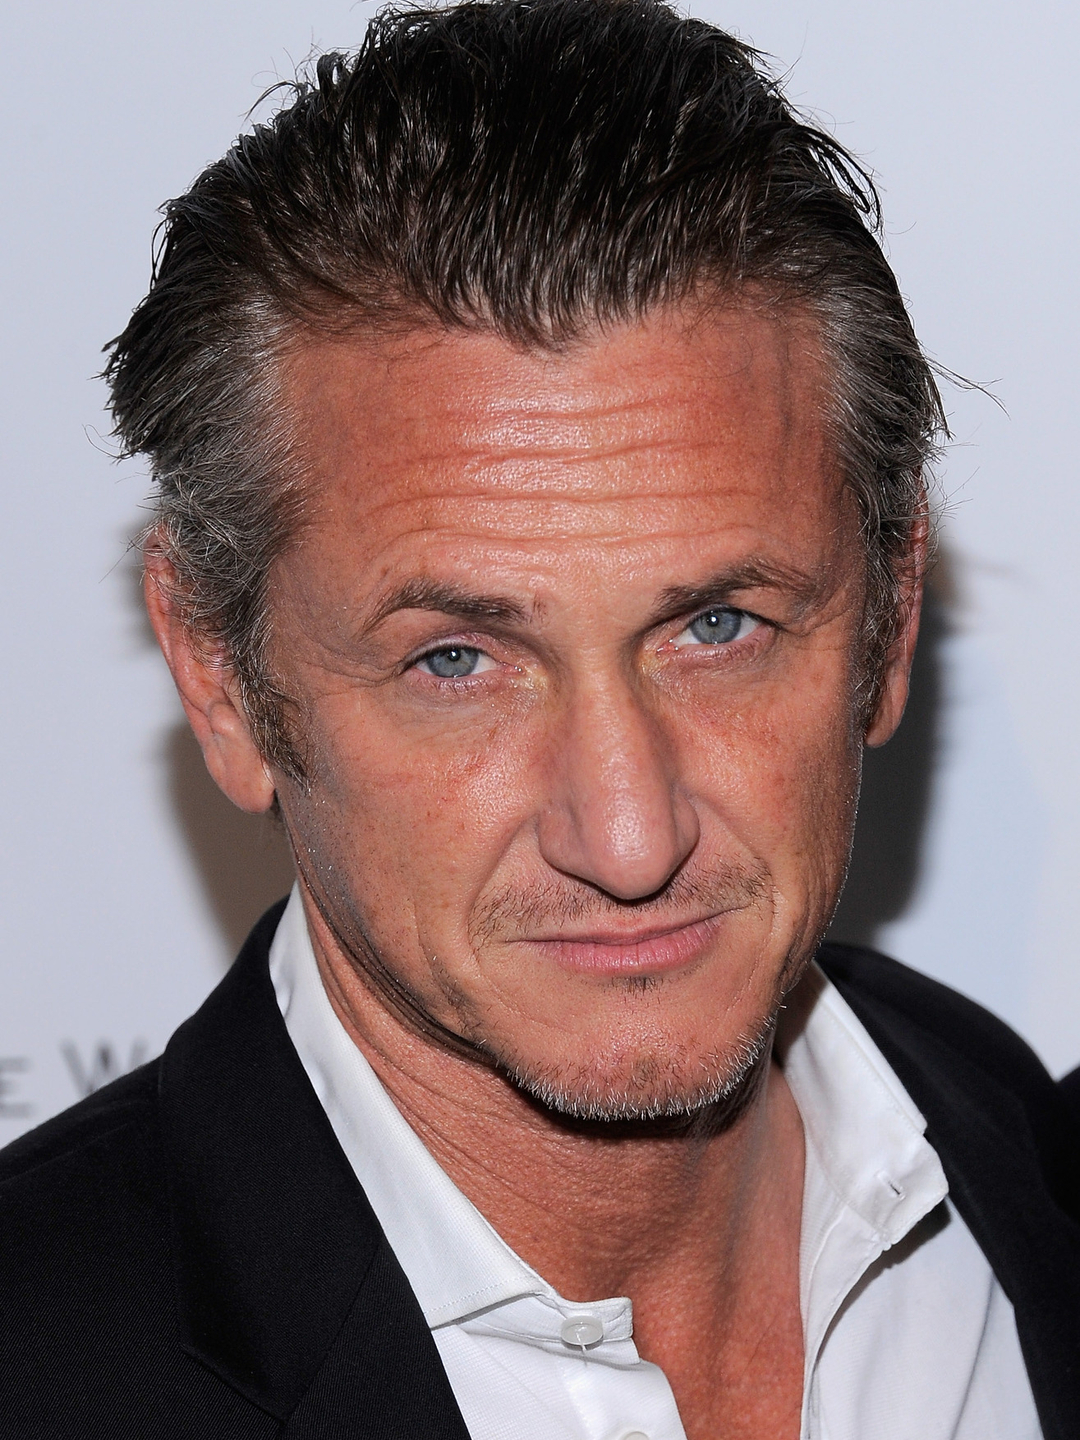 Sean Penn appearance